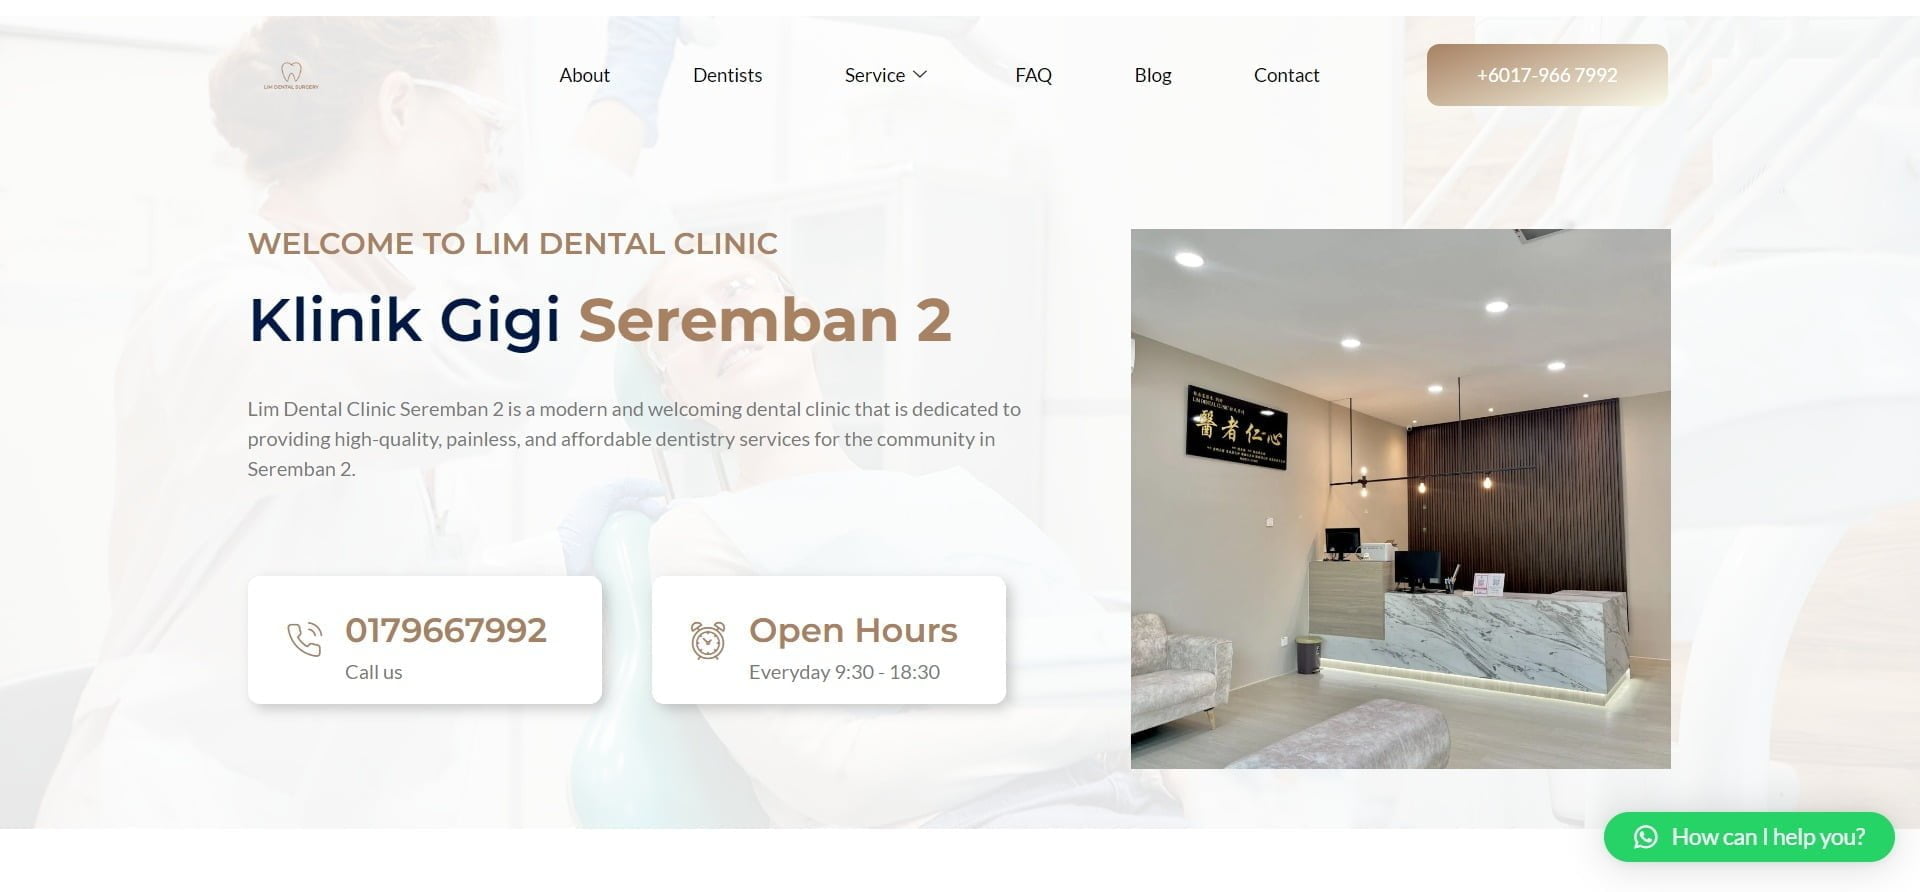 dental clinic, klinik gigi, dentist website, website design, development, wordpress, healthcare, malaysia, digital marketing